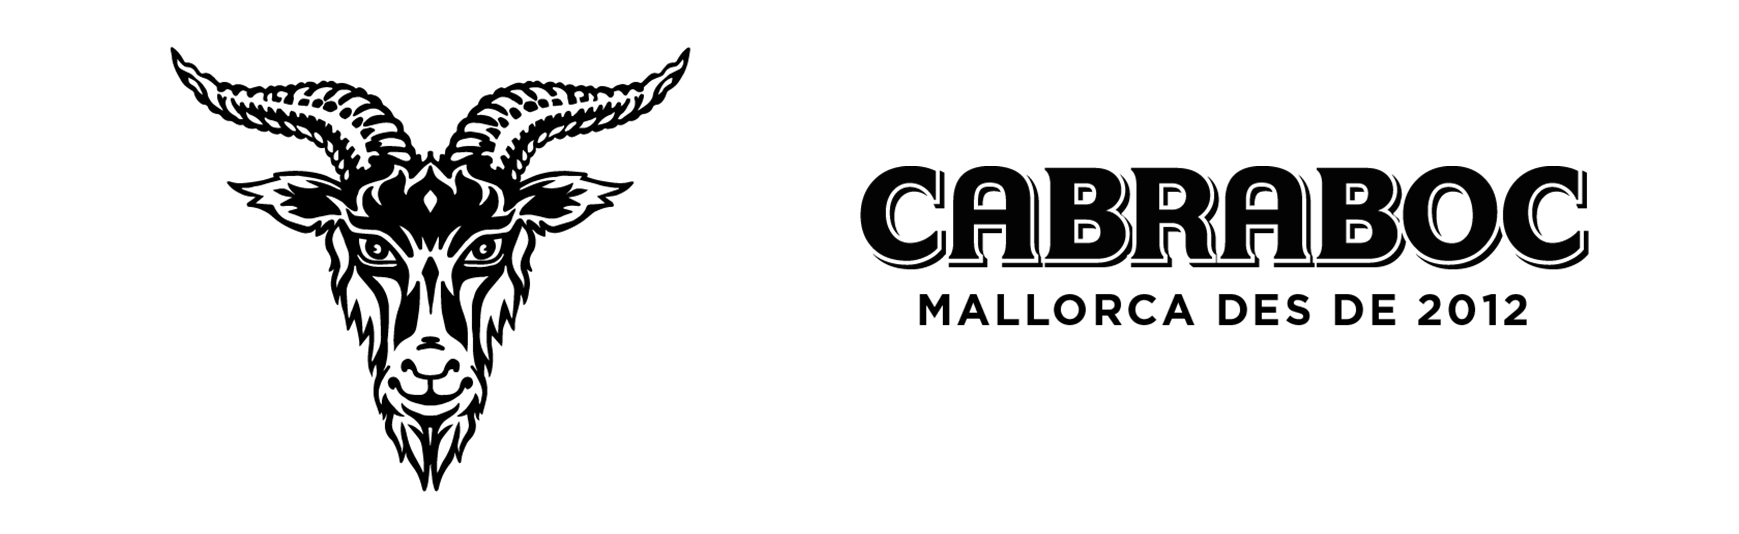 Image of the Cabraboc Logo